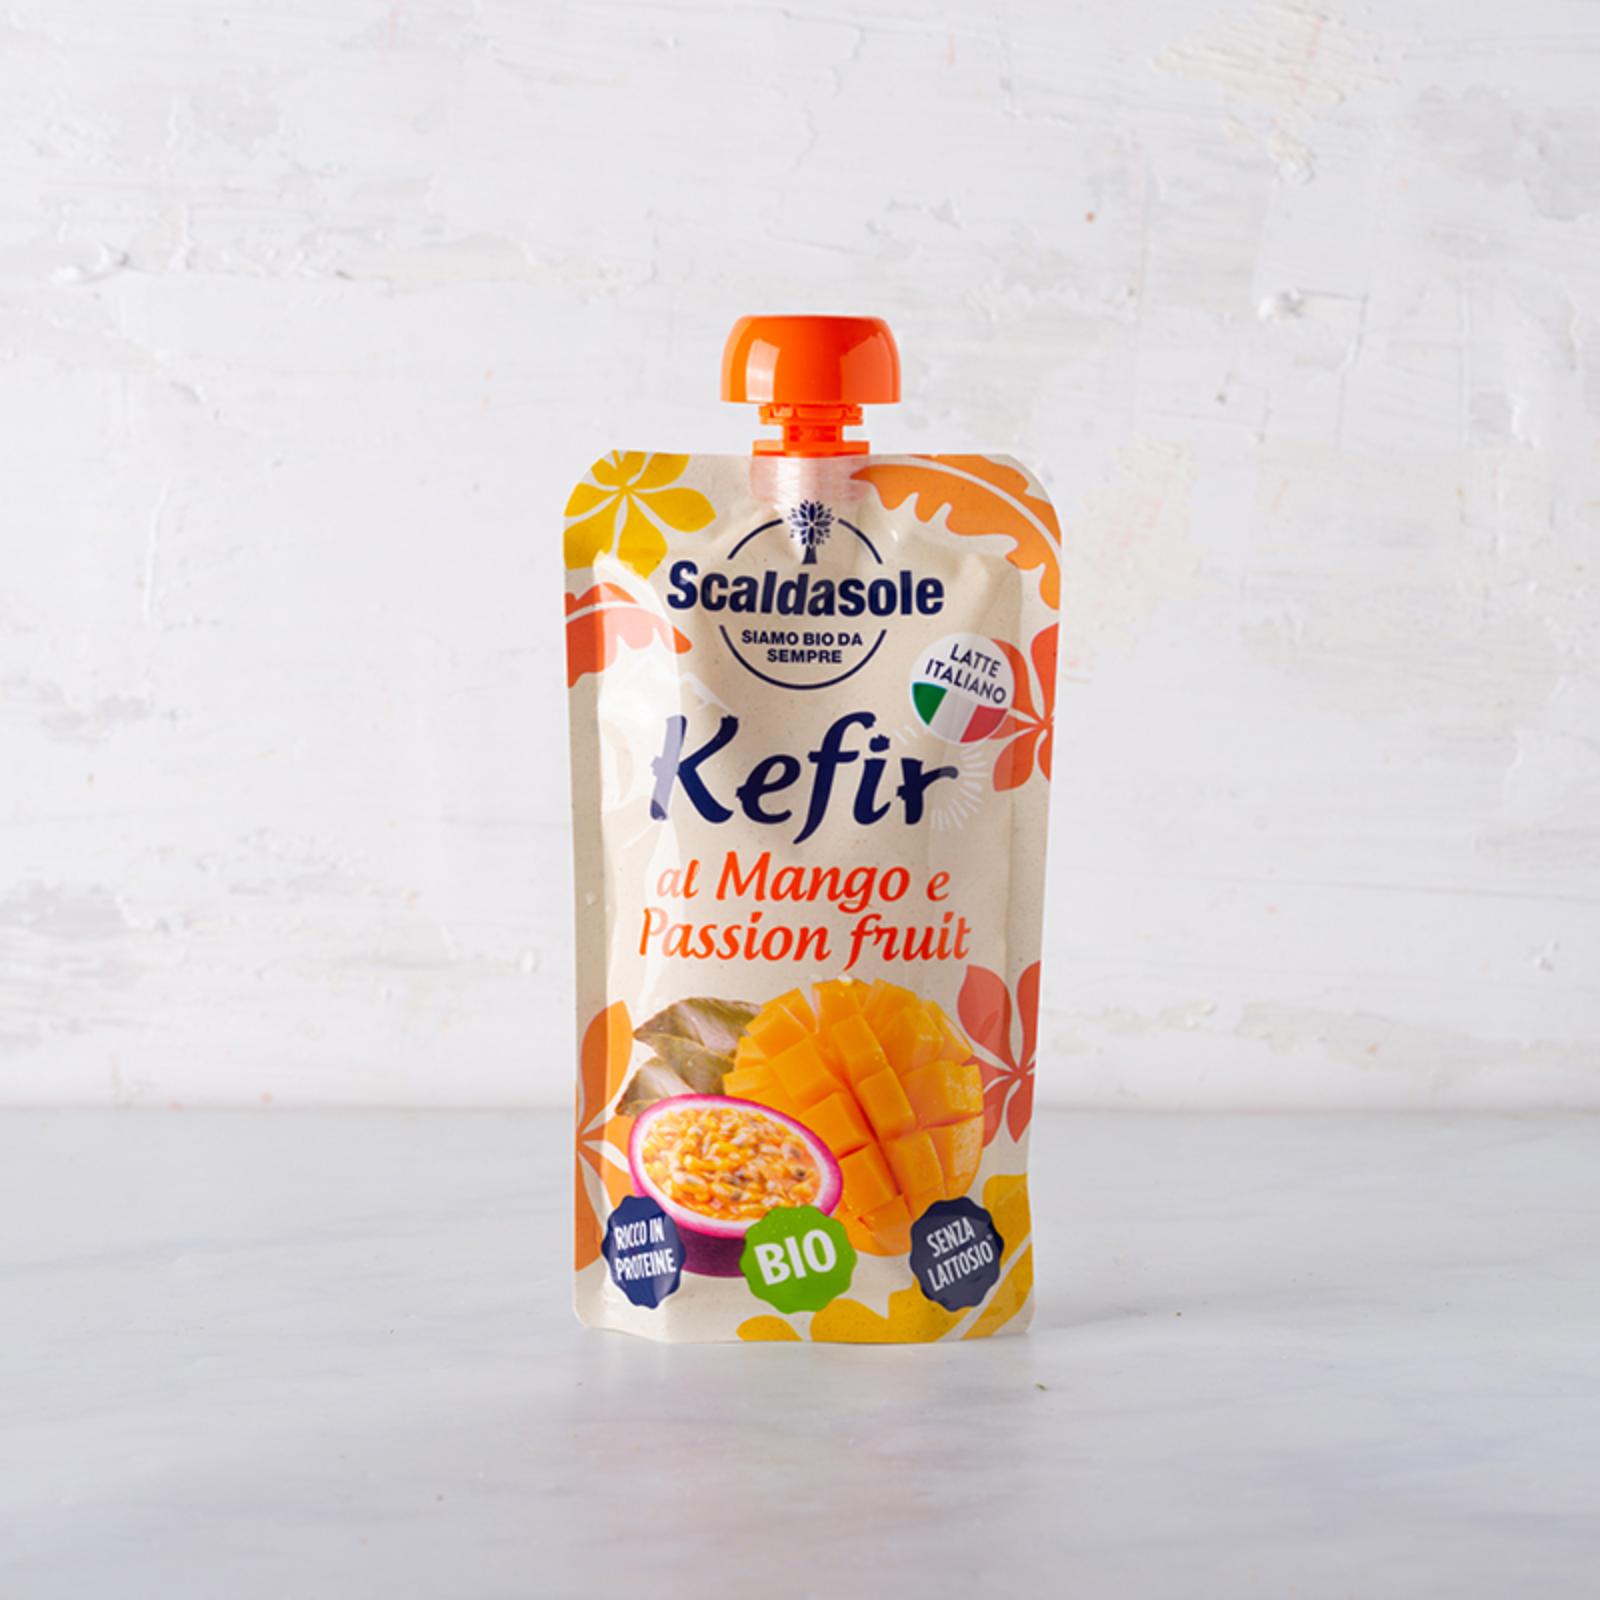 Kefir mango e passion fruit senza lattosio BIO